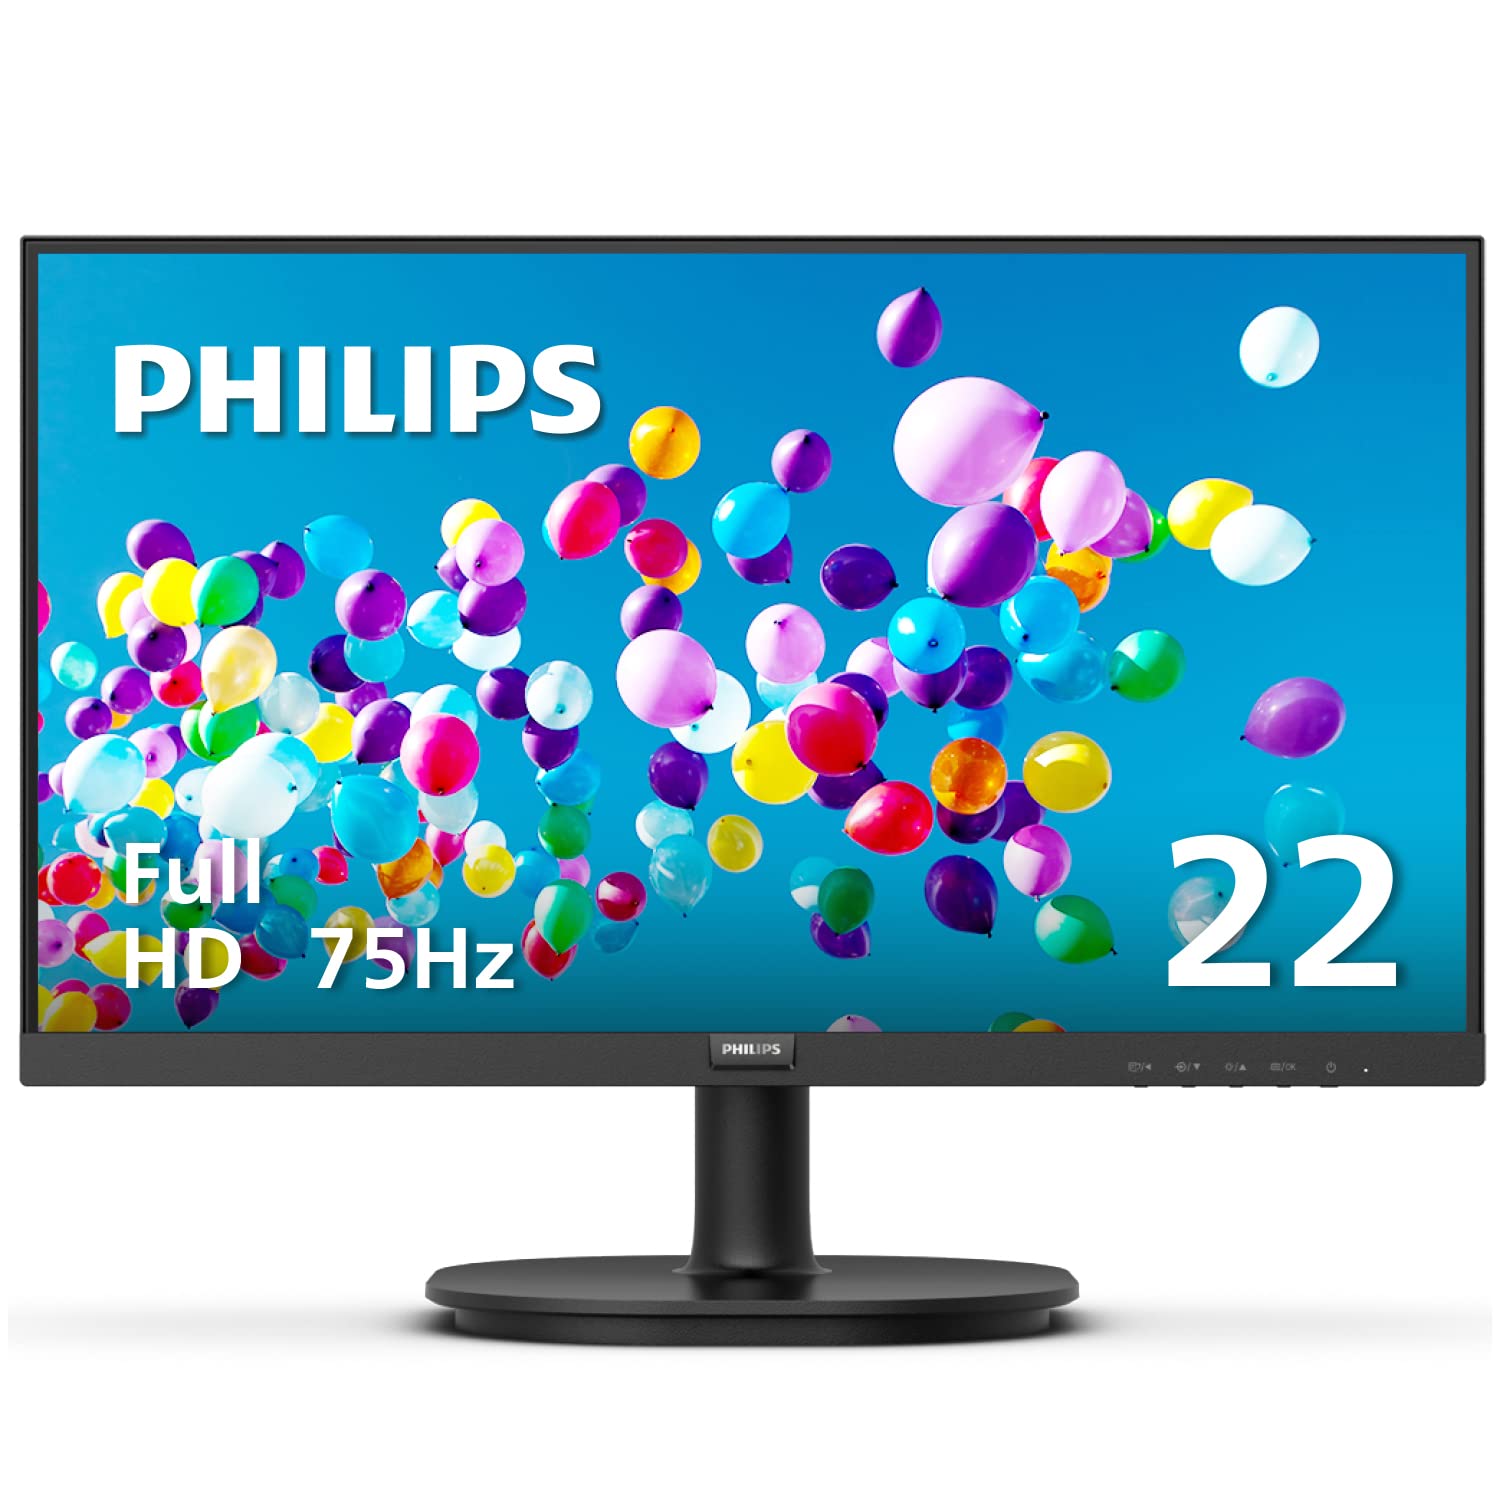 Philips Computer Monitors Philips Pur 2